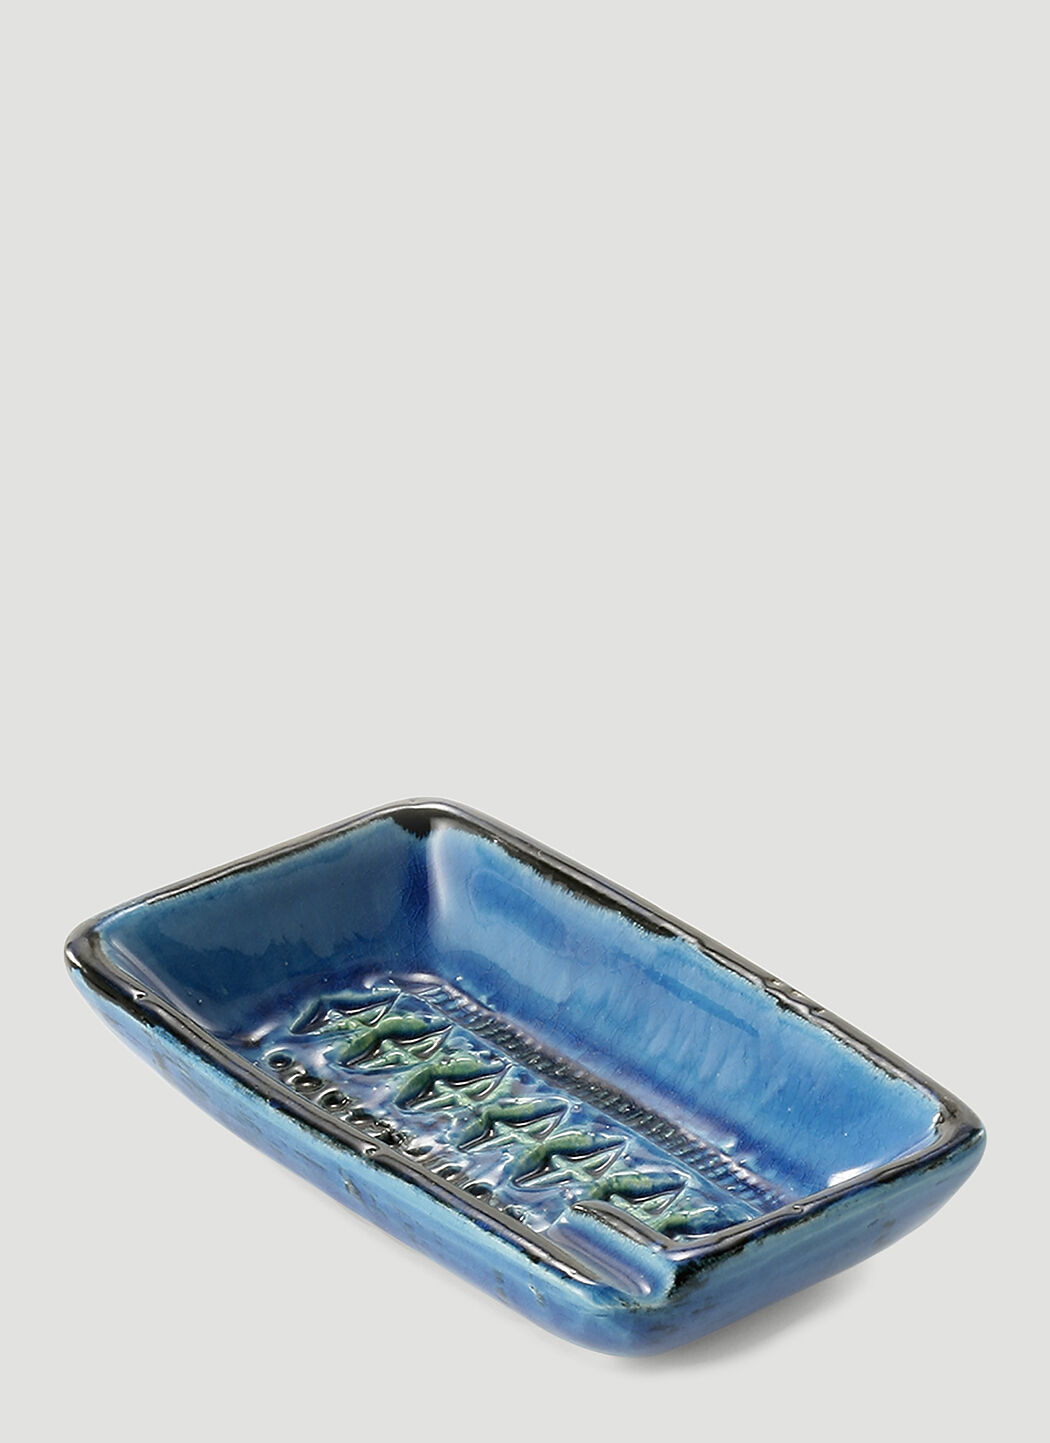 Bitossi Ceramiche Rimini Blu Medium Ashtray Blue wps0644263